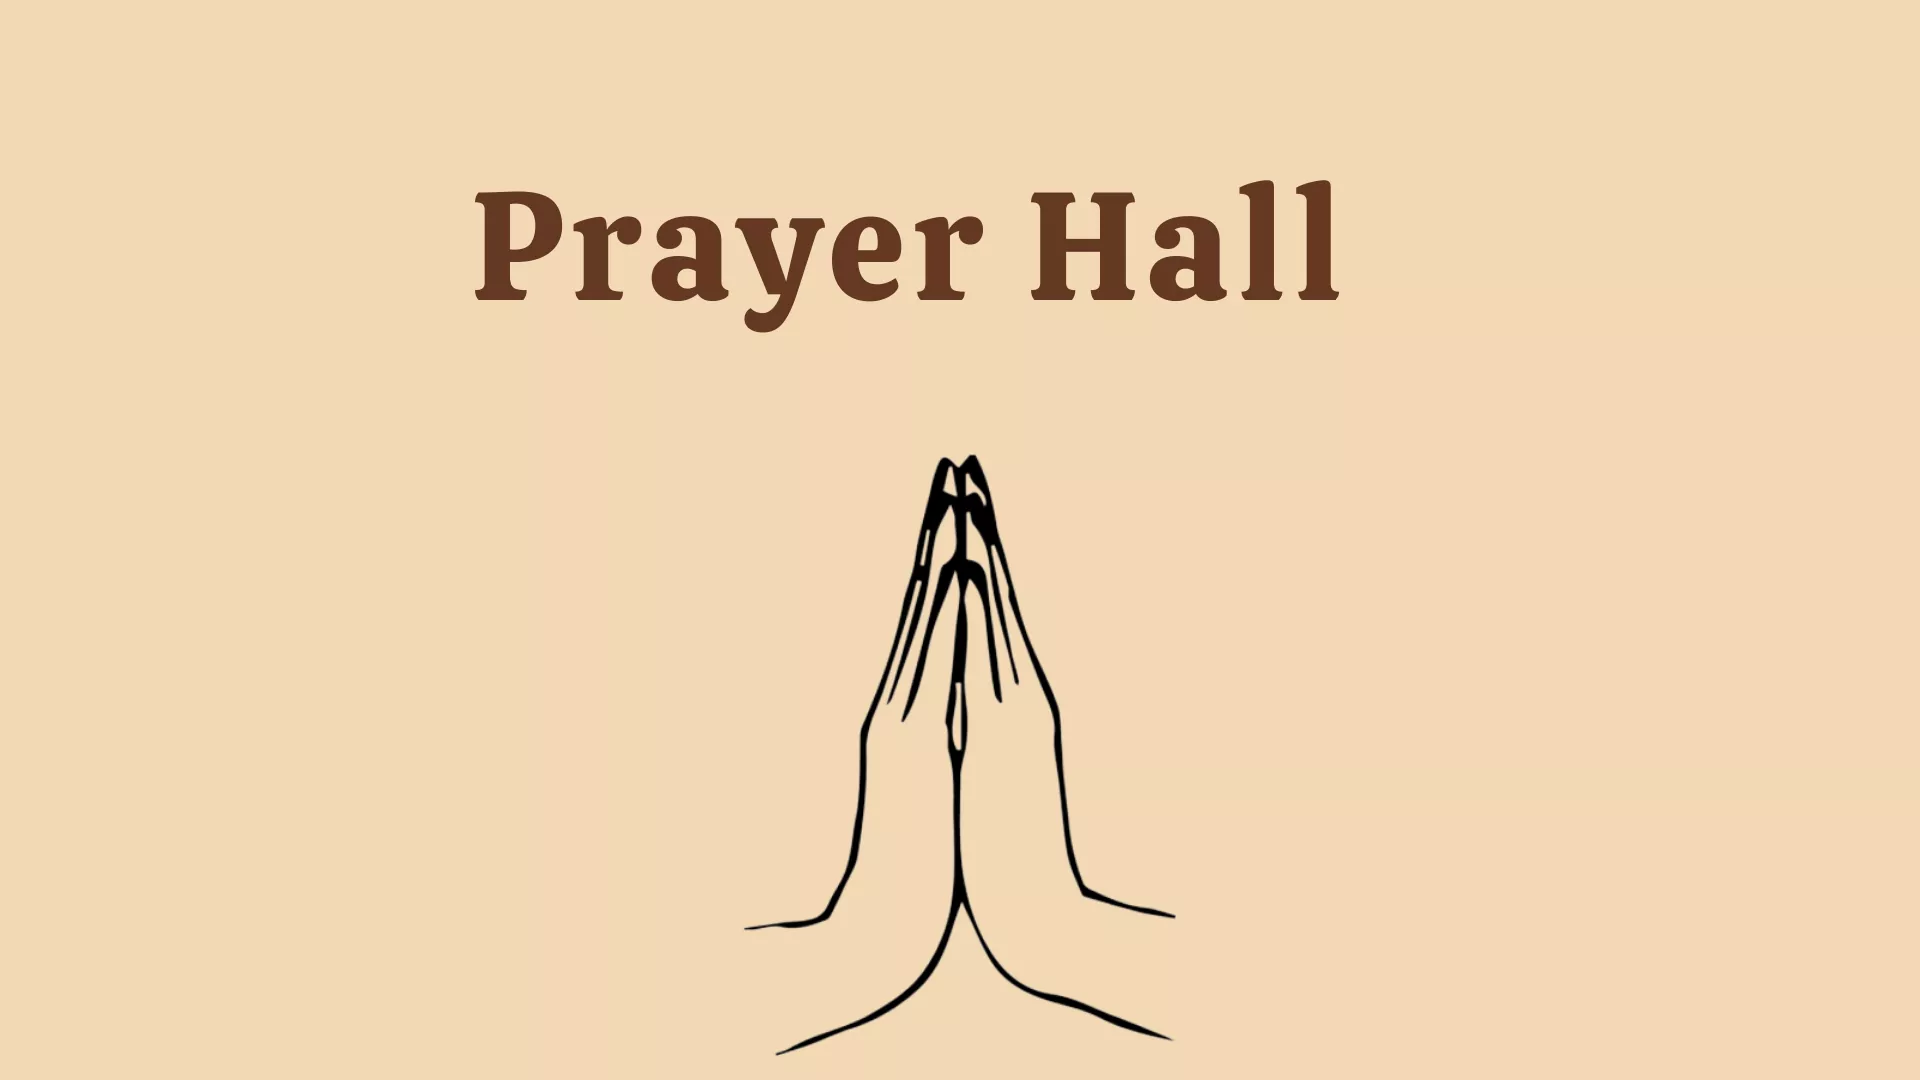 Funeral prayer hall